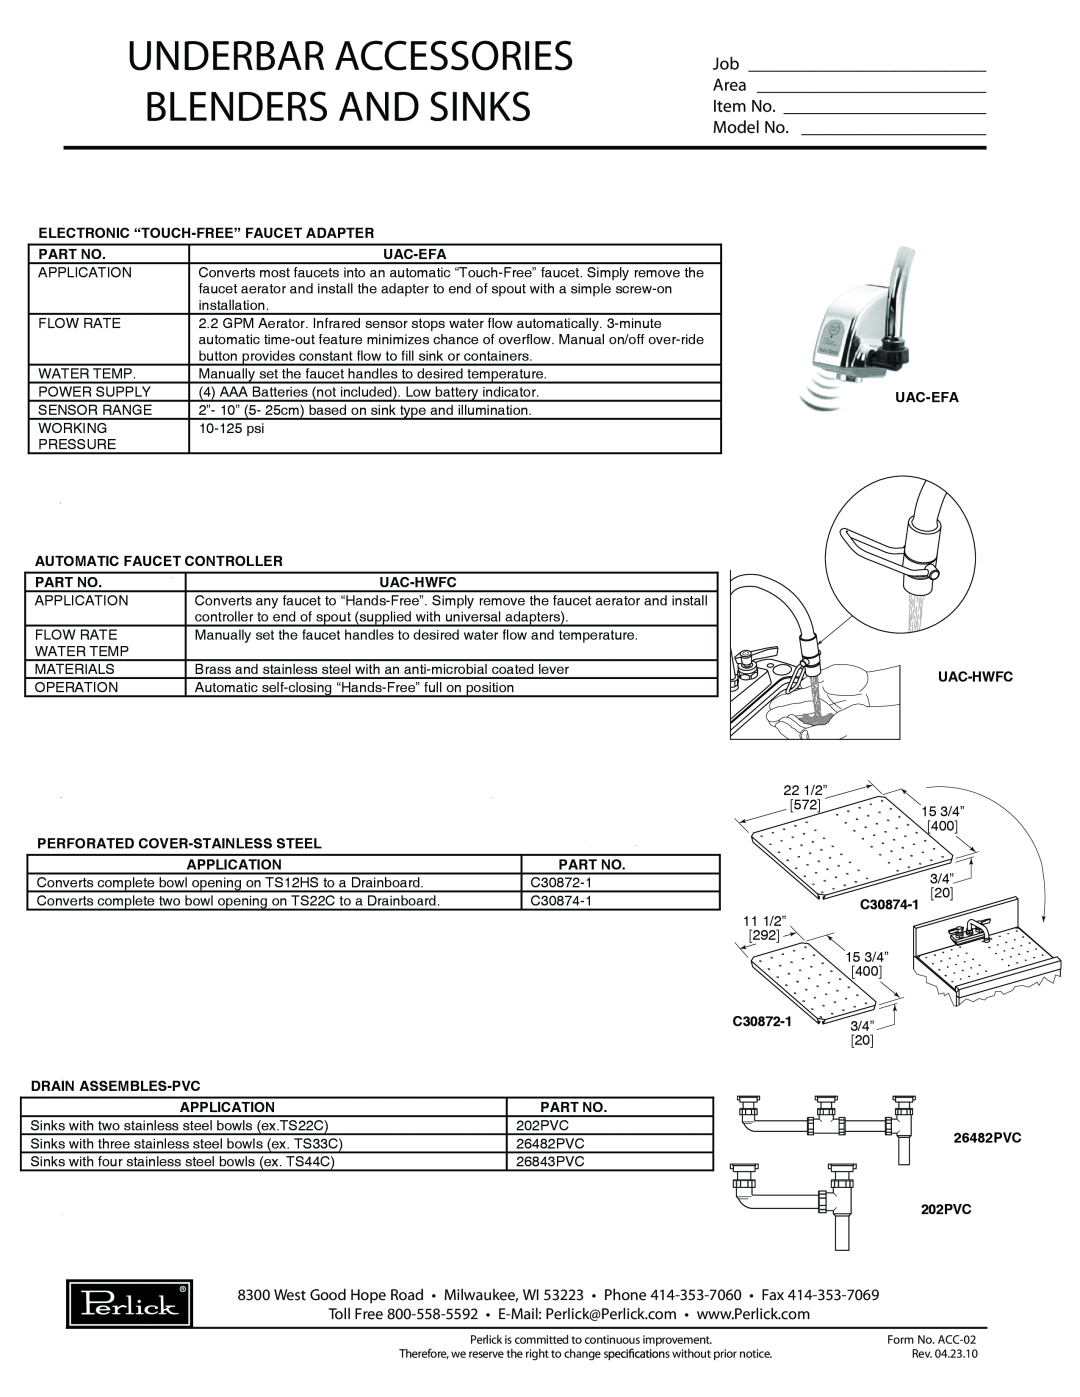 Perlick UAC-WWB, 7055-52, 7055-48, 7055A46 manual Underbar Accessories Blenders And Sinks, Job, Area, Item No, Model No 